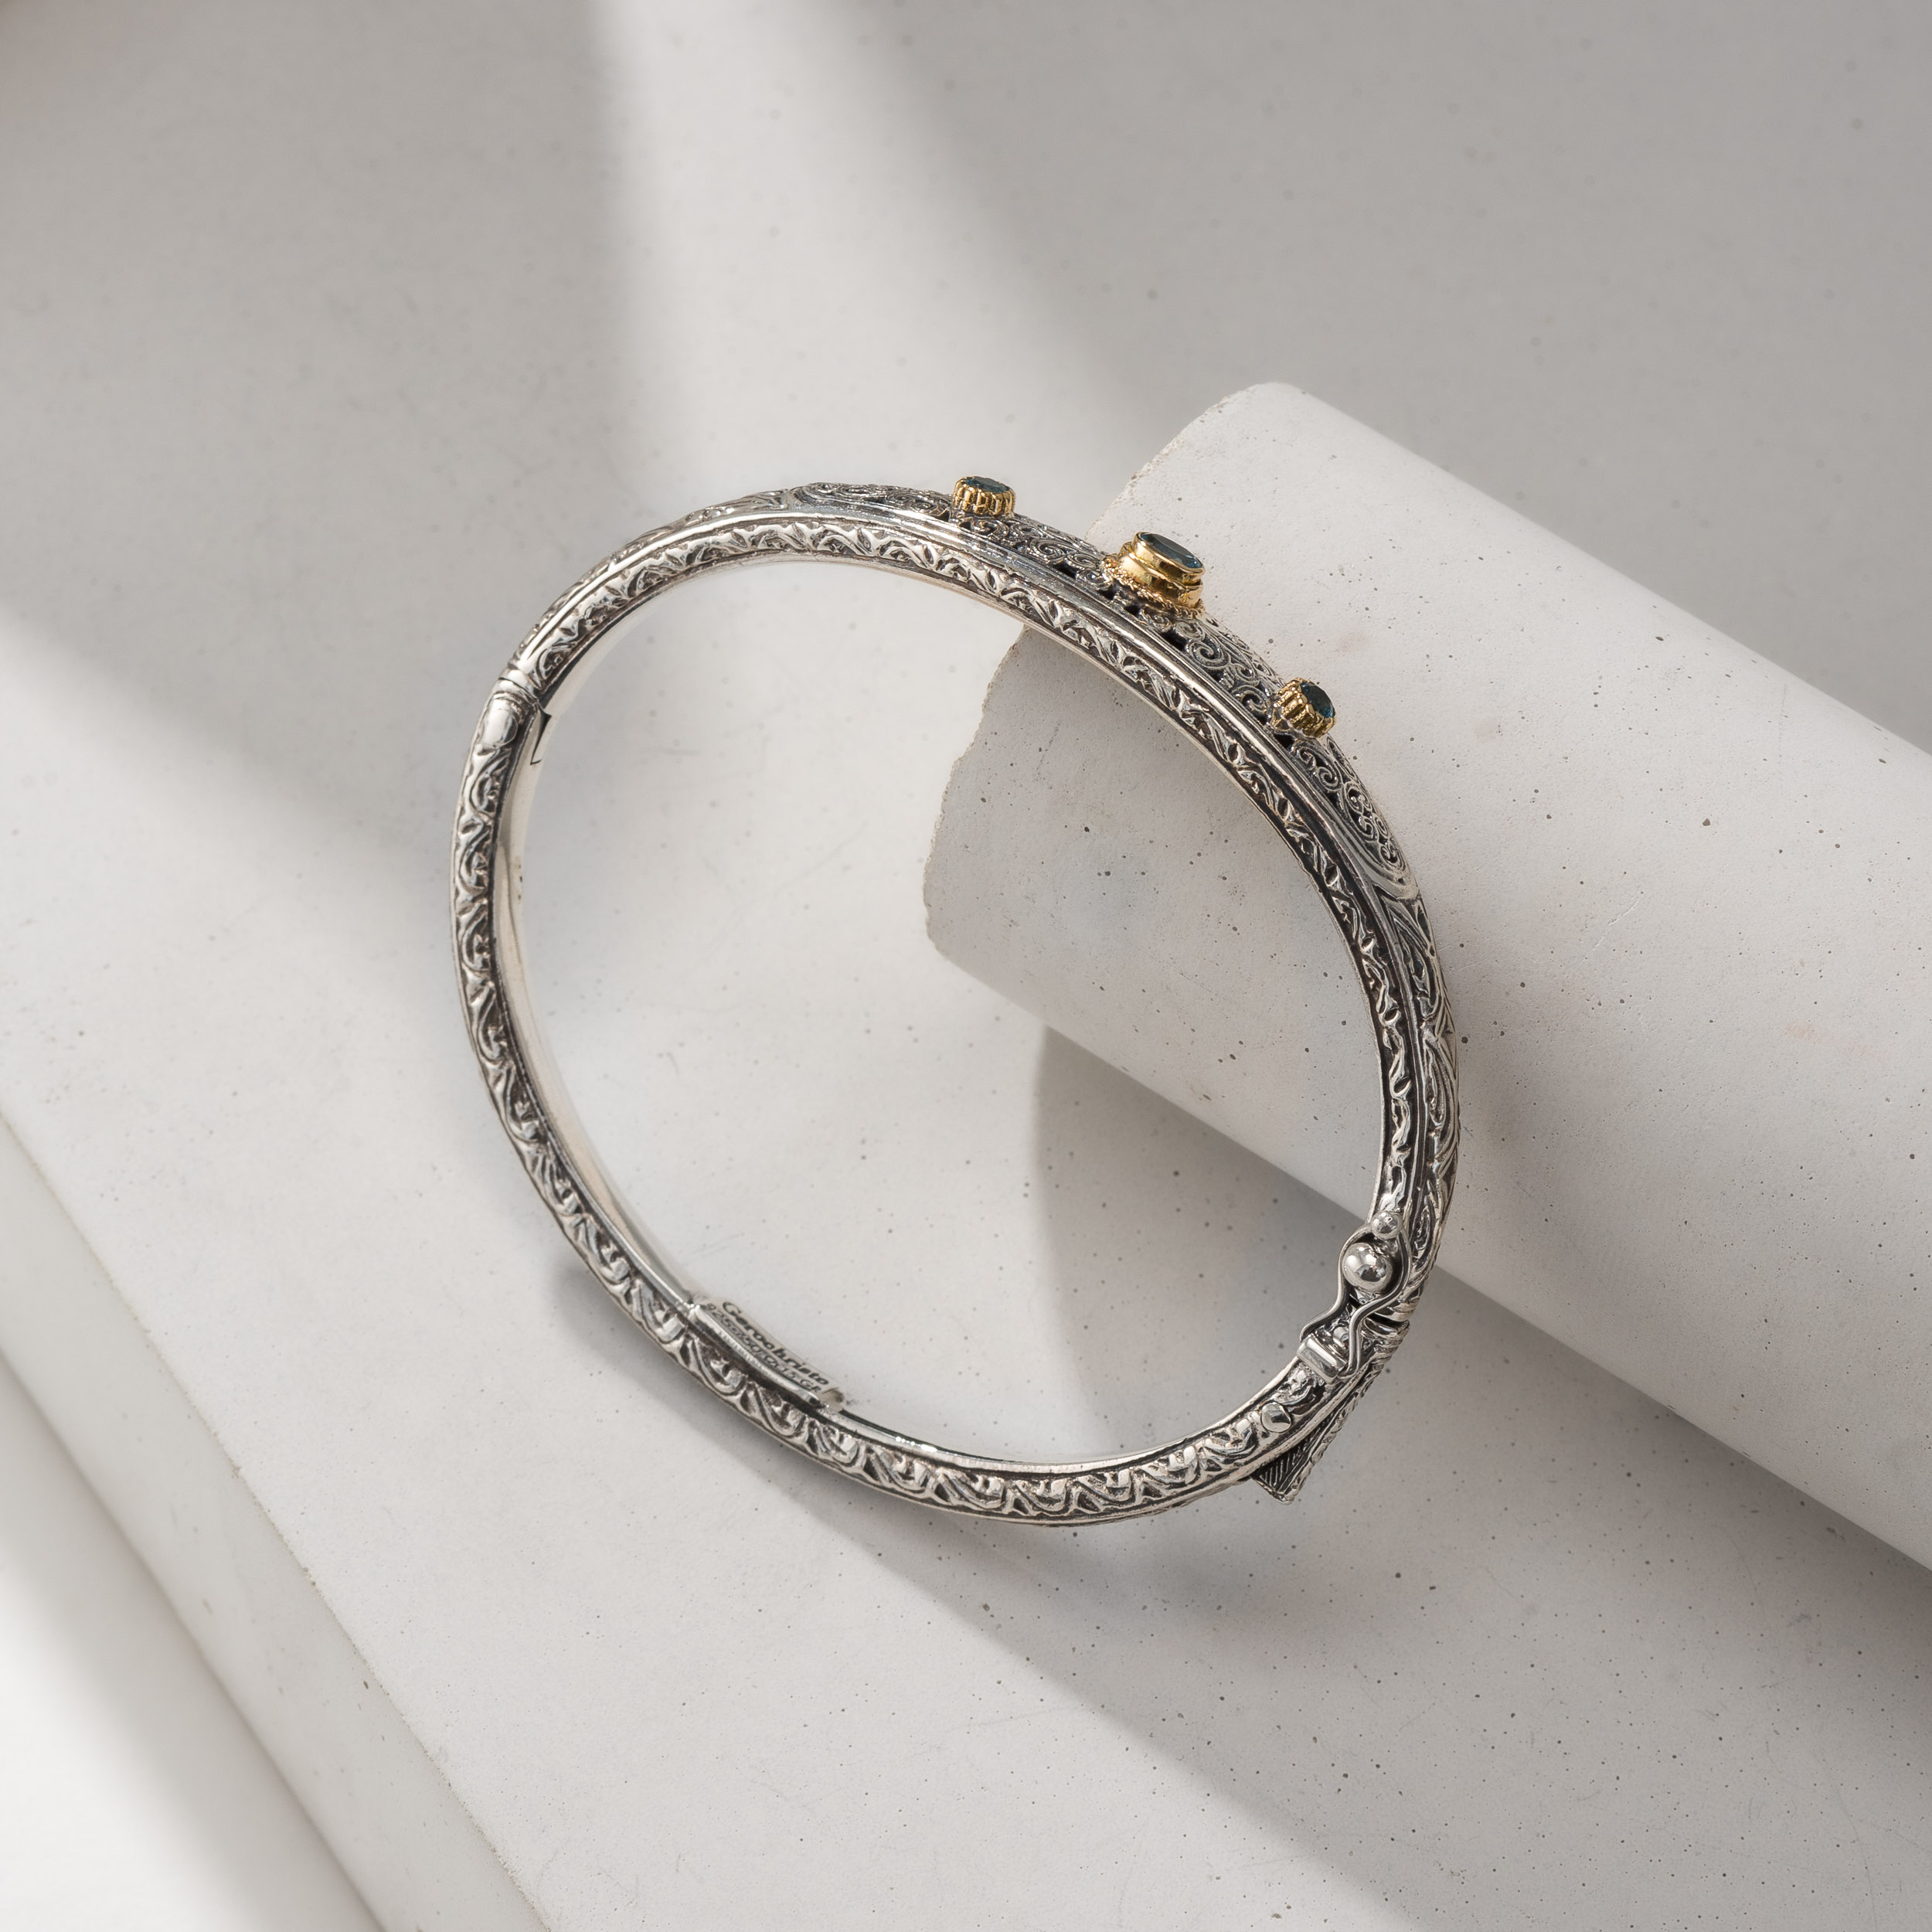 Mediterranean Bracelet in 18K Gold and Sterling Silver with Gemstones